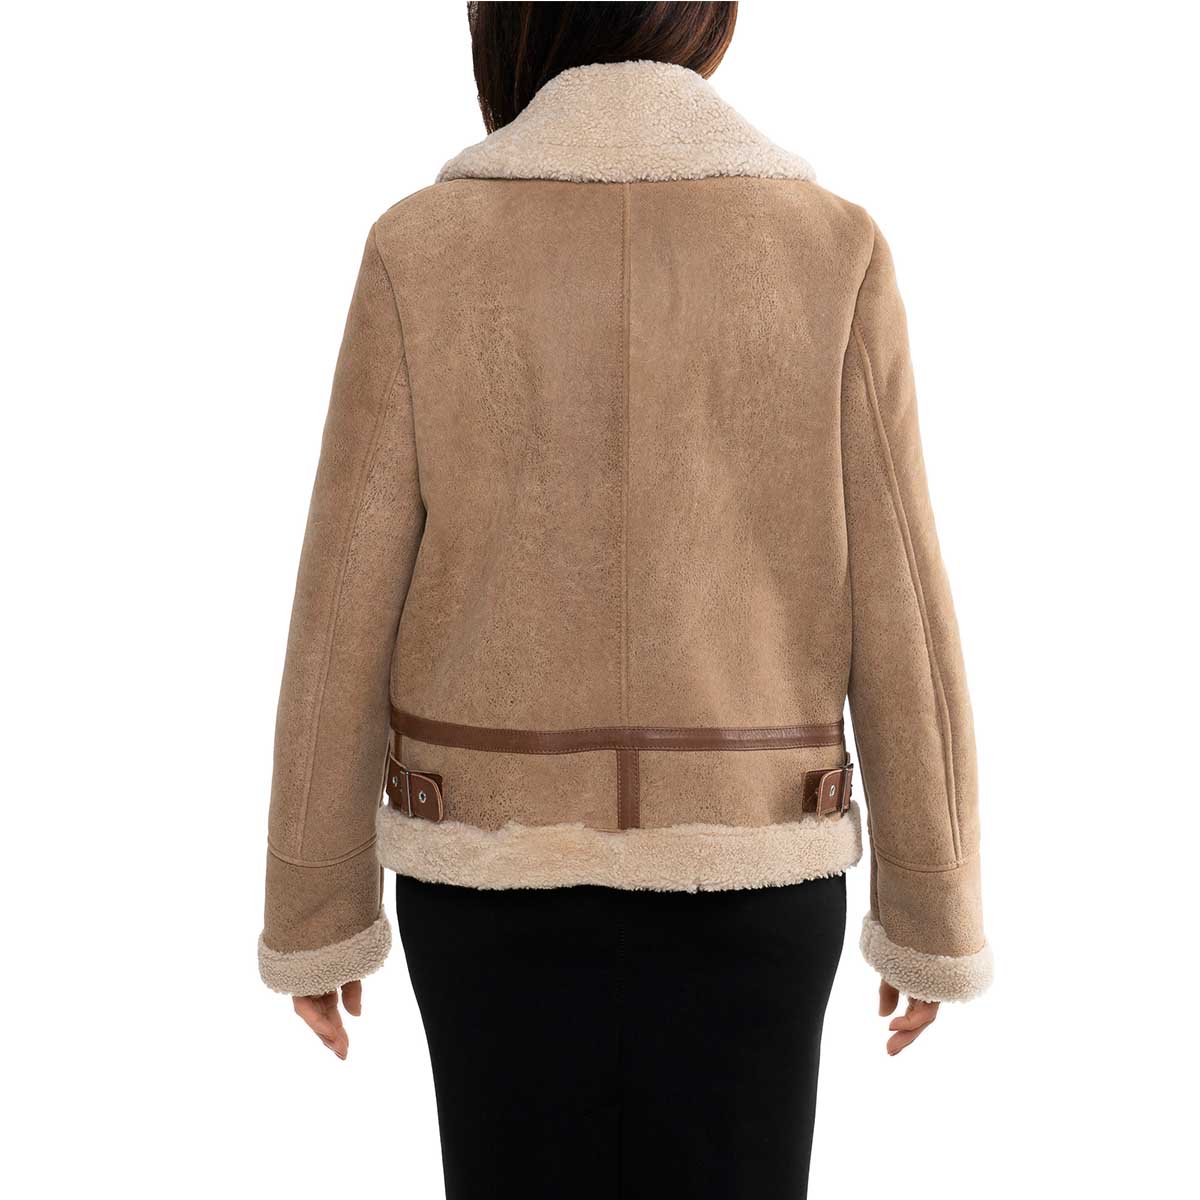 Brown women's sheepskin with zipper